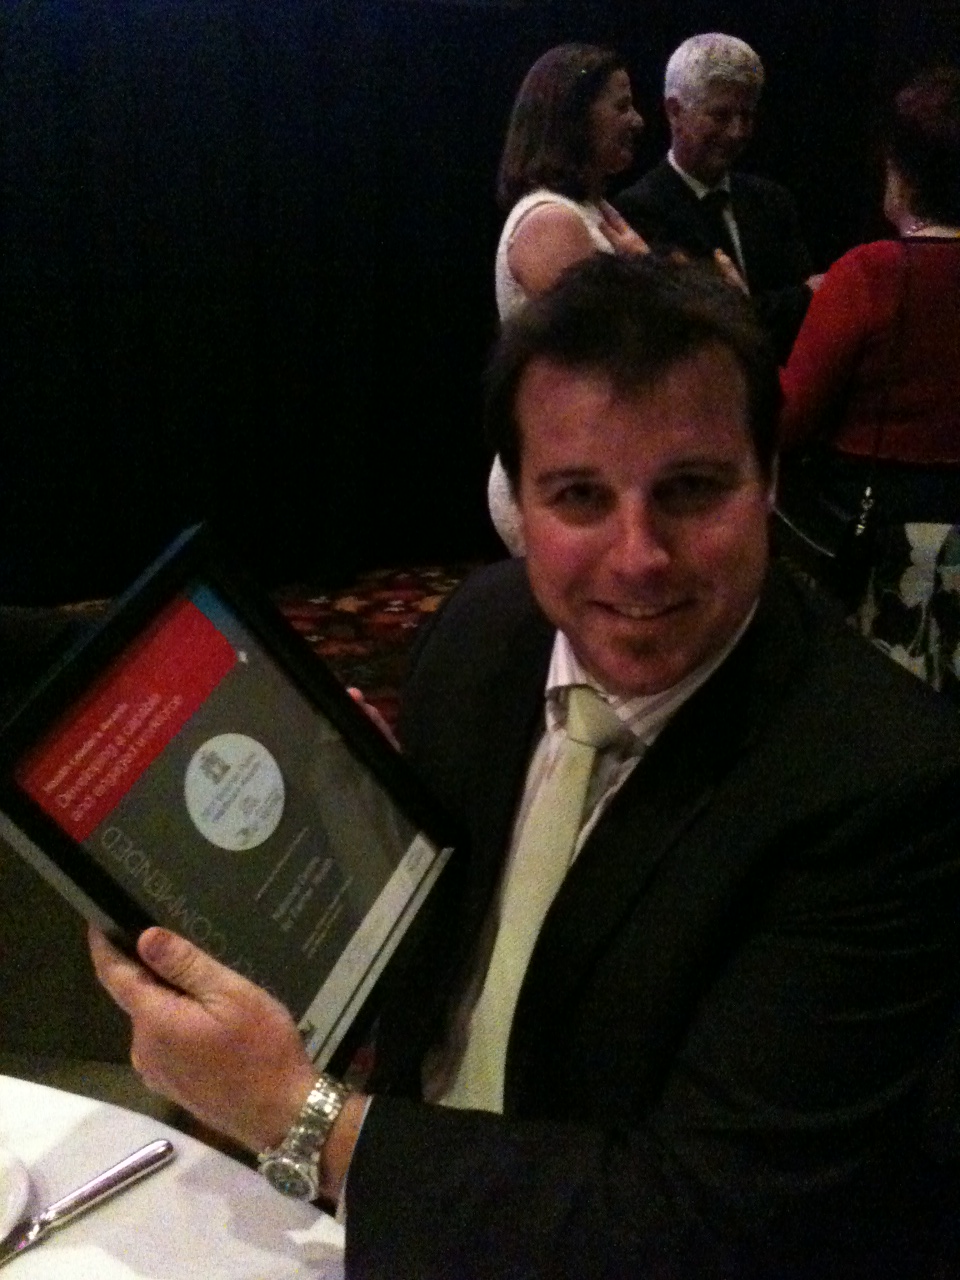 Scott McCoombe at the Victorian Public Healthcare awards 2011